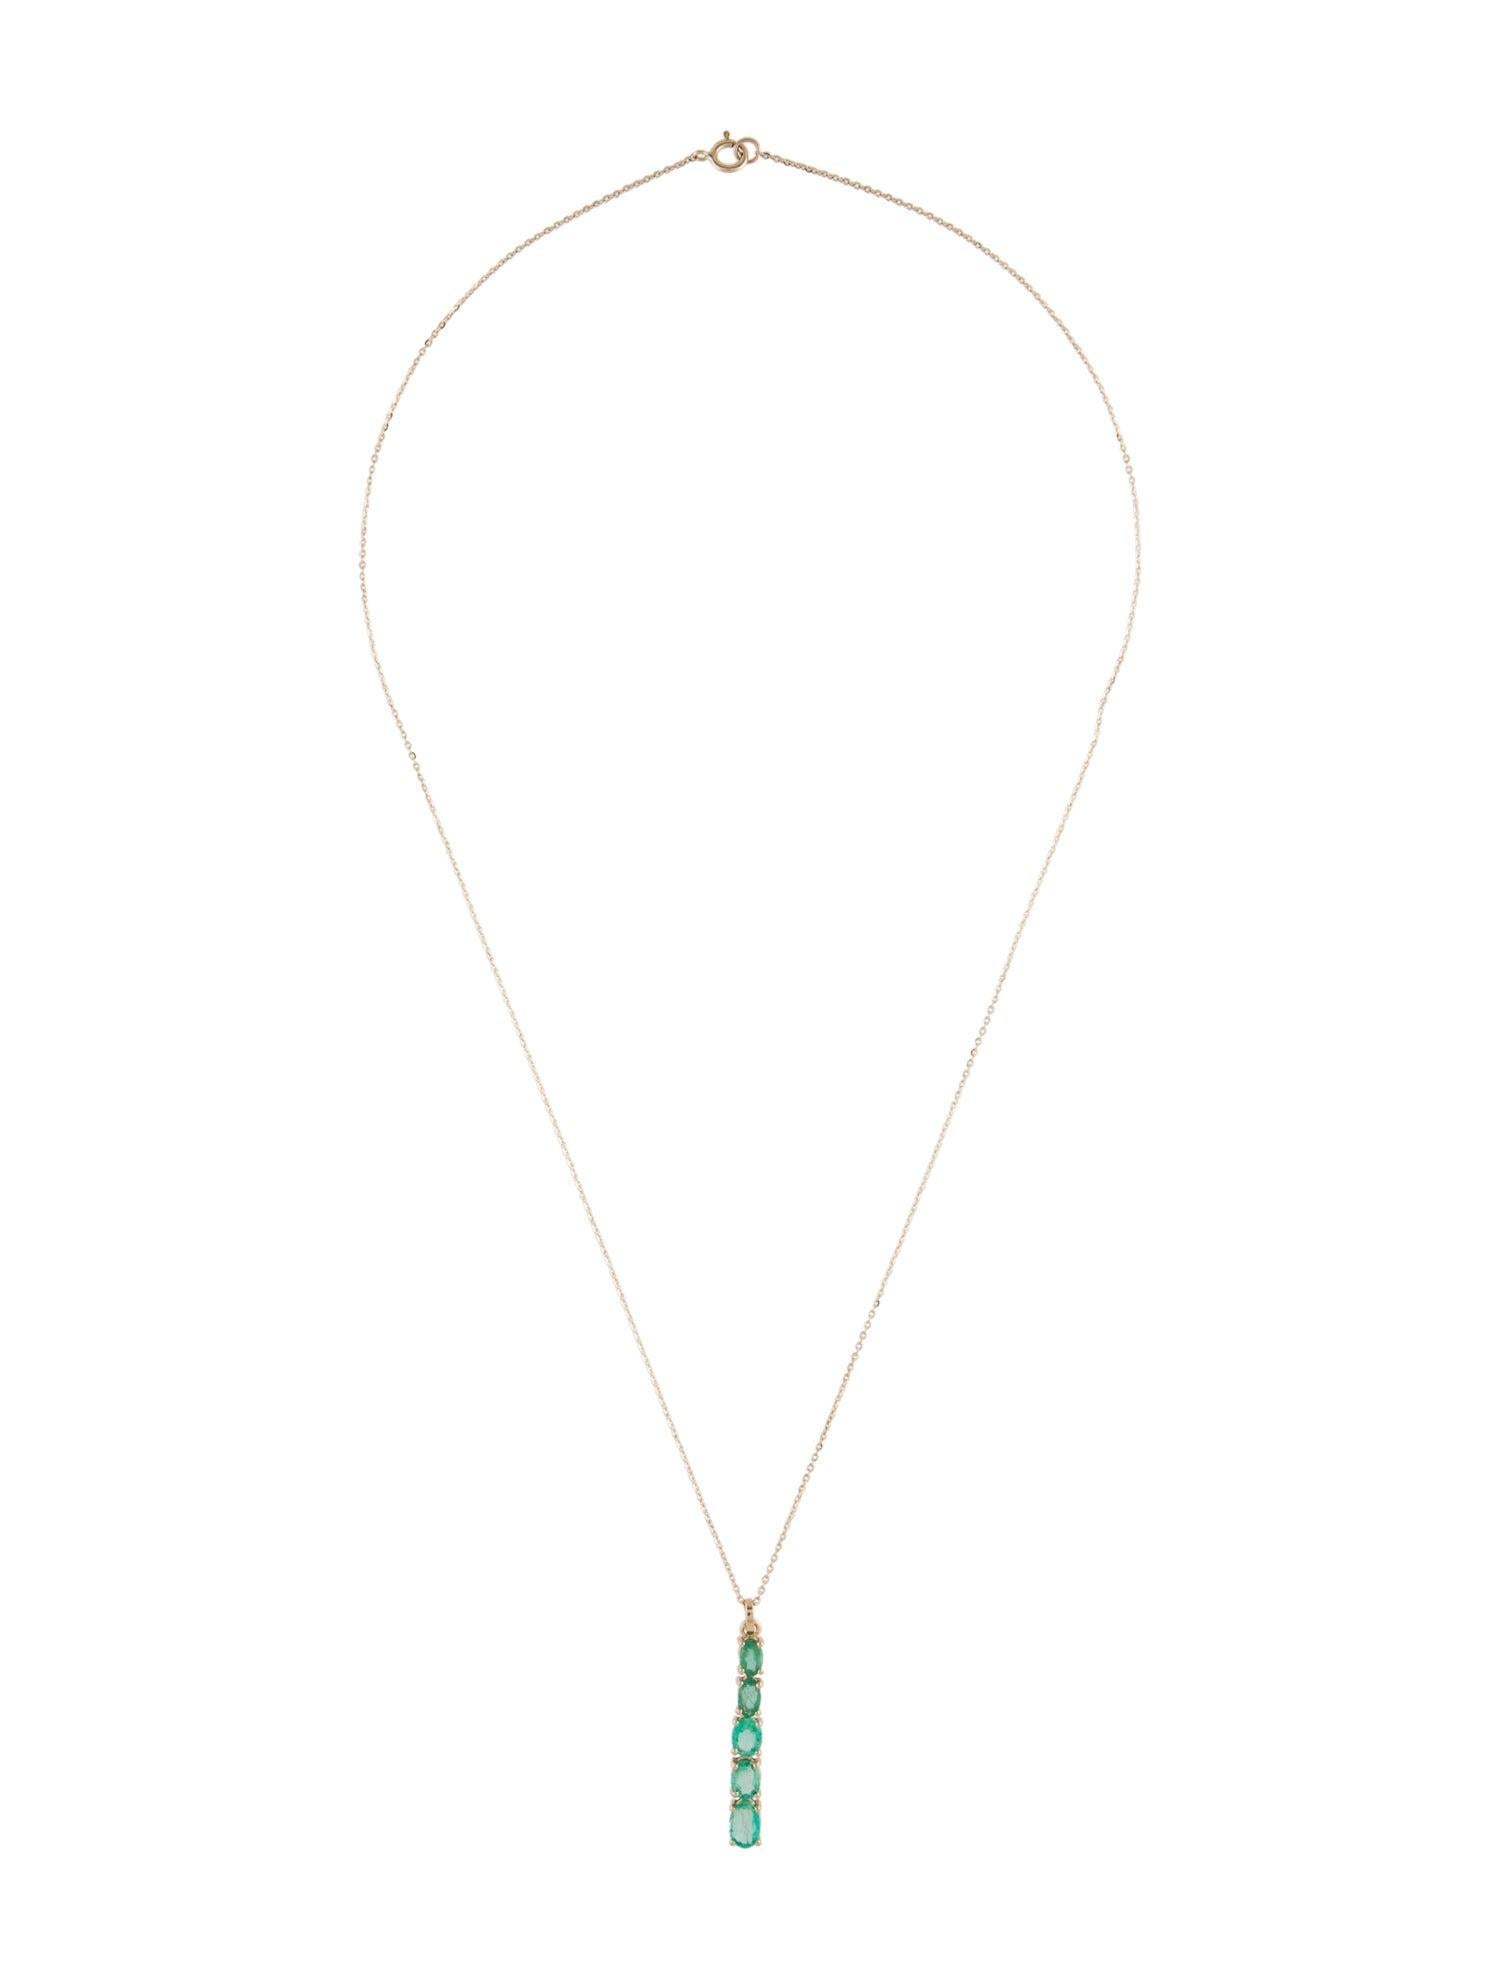 Women's 14K 1.44ctw Emerald Pendant Necklace: Elegant Luxury Statement Jewelry Piece For Sale